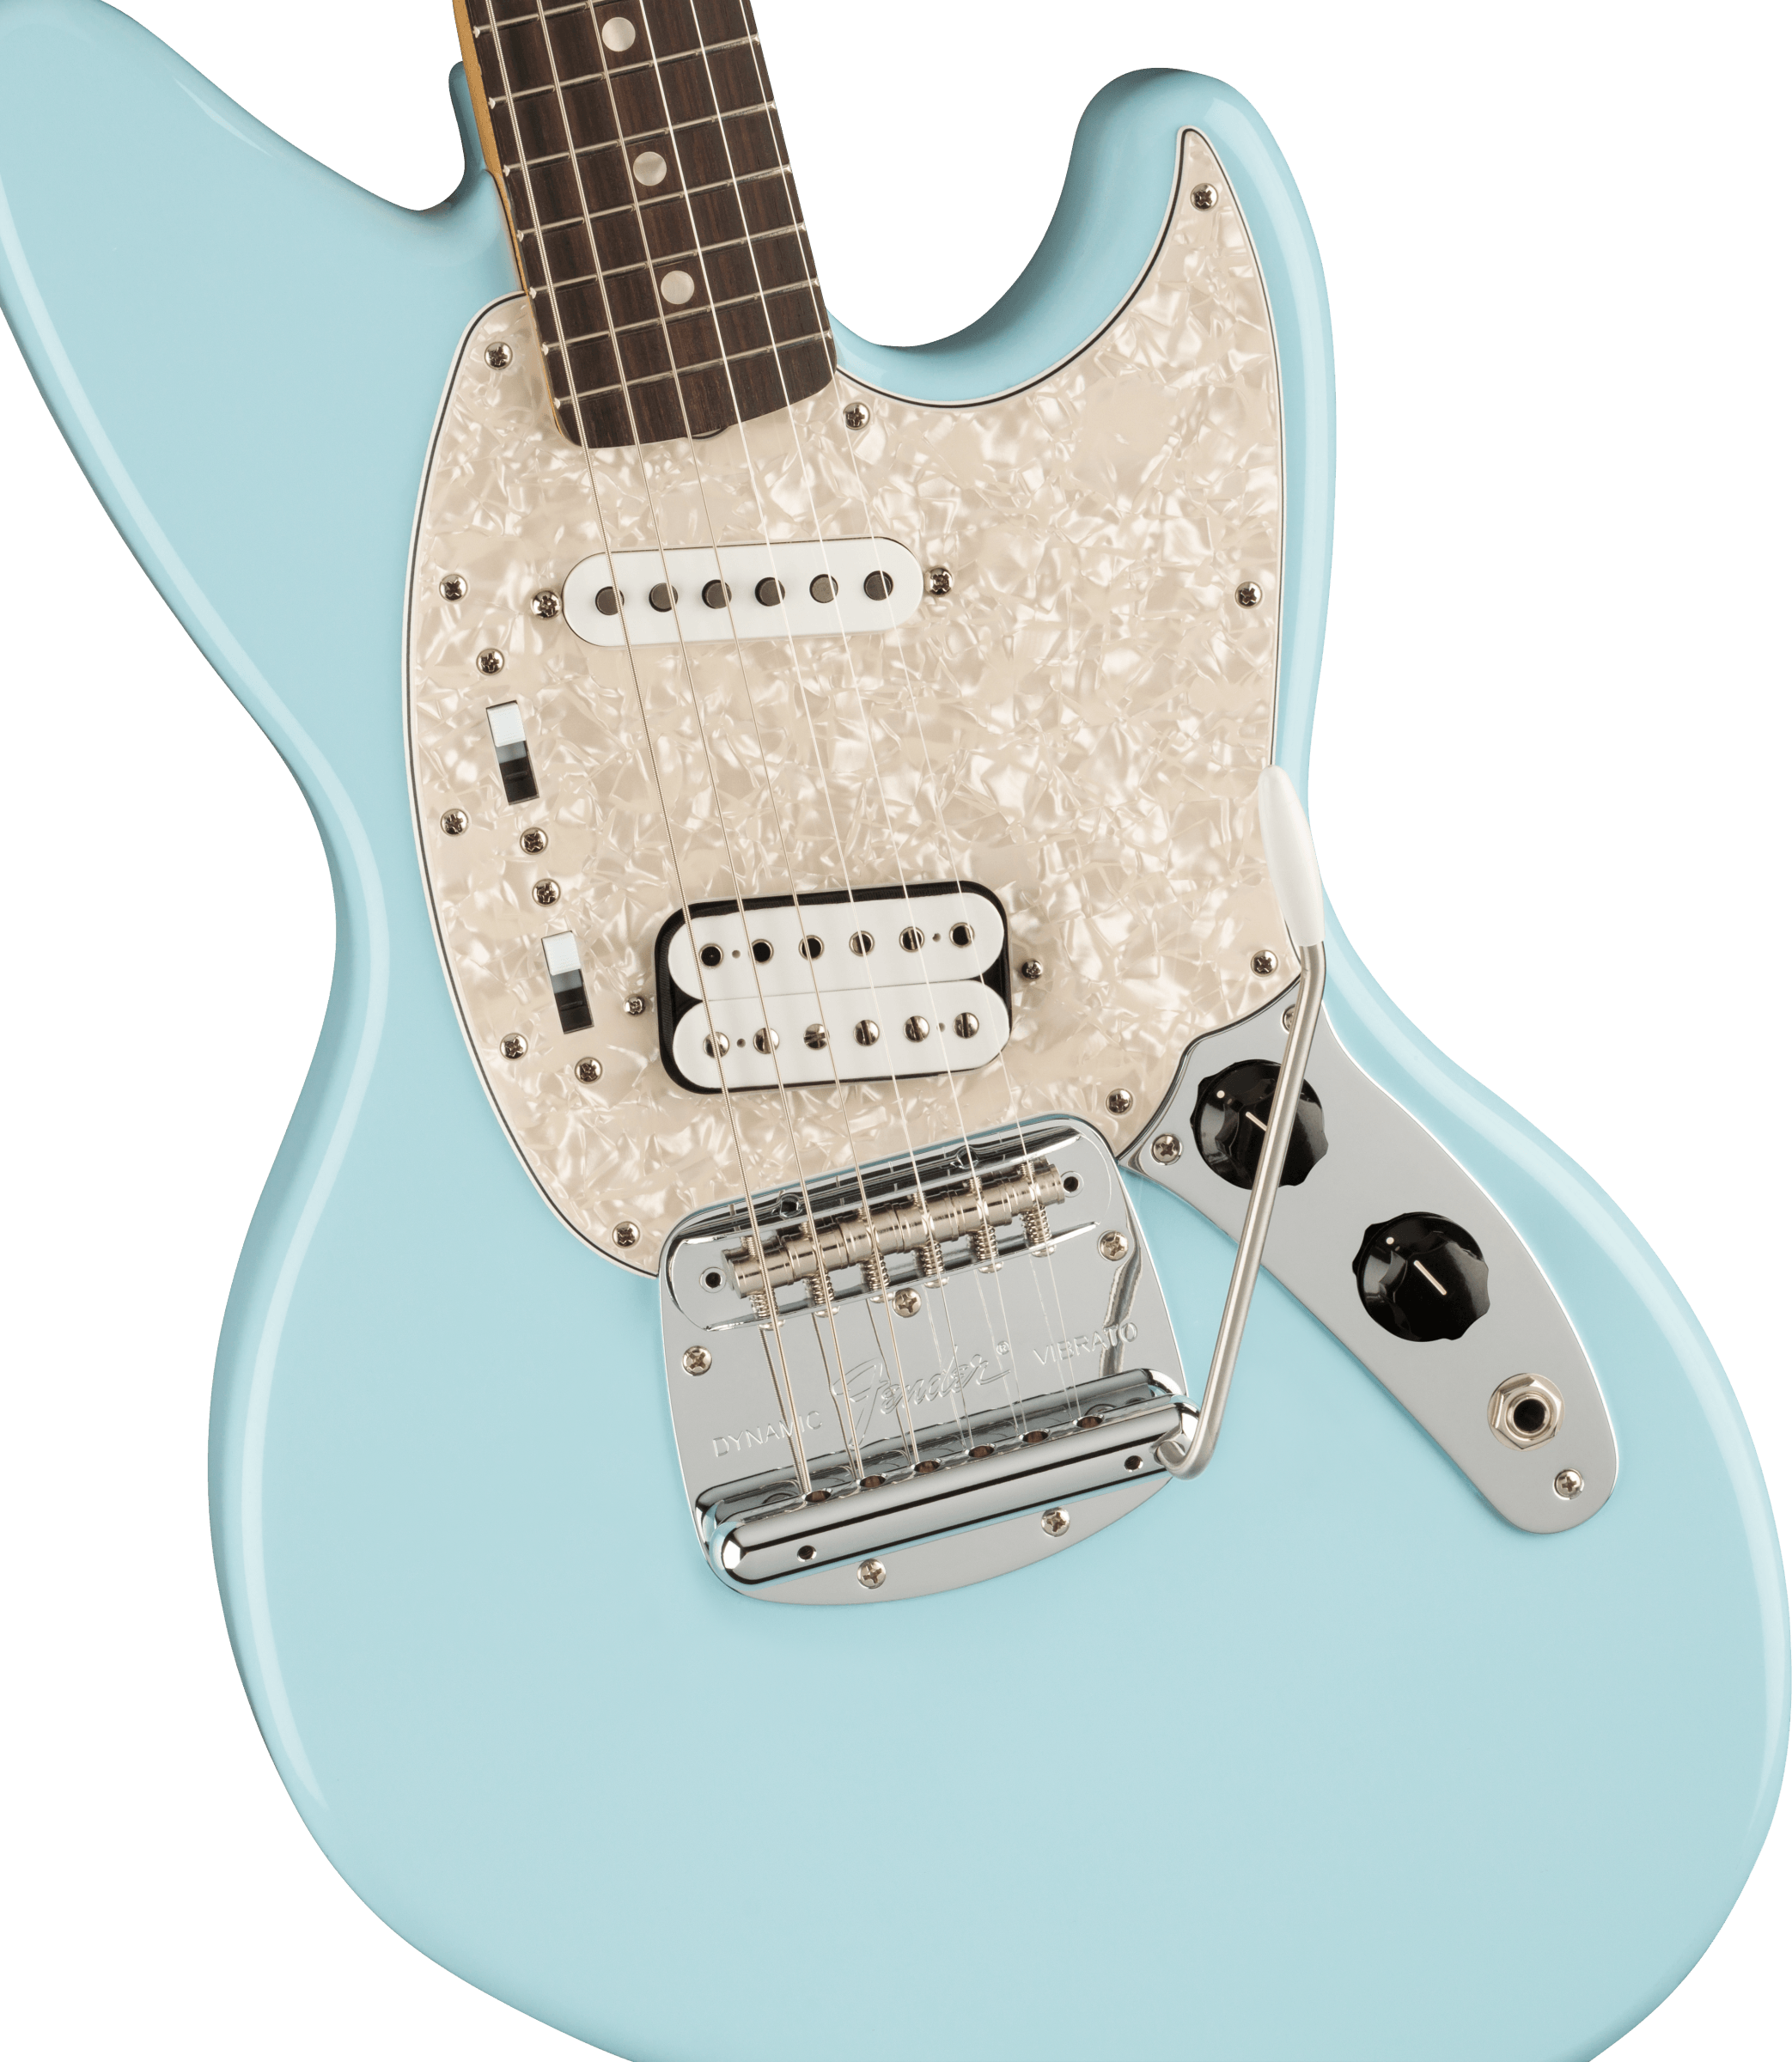 Fender Jag-stang Kurt Cobain Artist Hs Trem Rw - Sonic Blue - Retro rock electric guitar - Variation 2